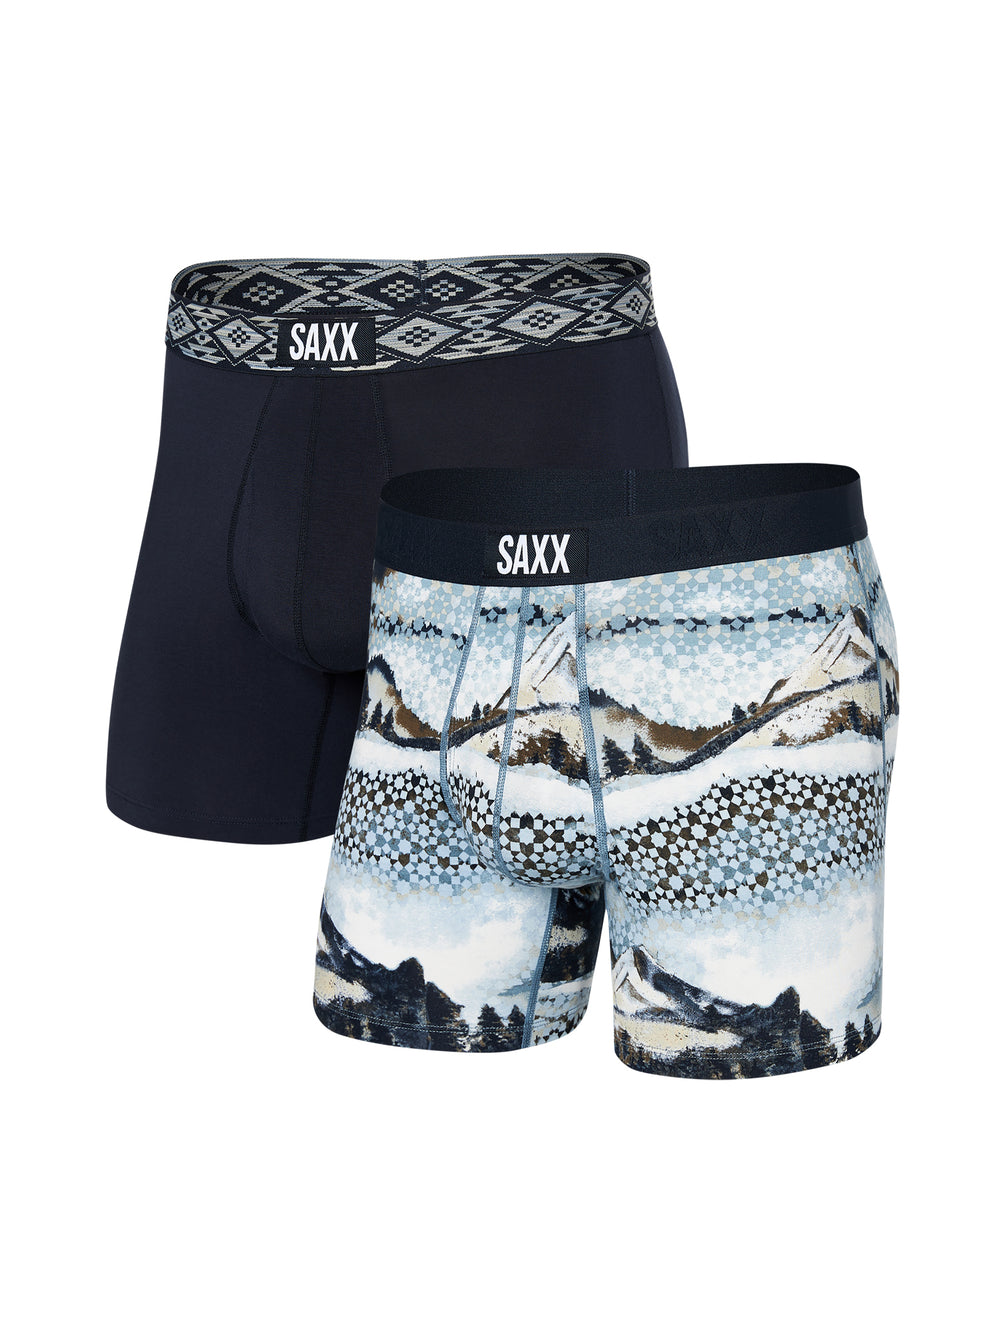 Black boxer briefs VIBE - 2-pack, Saxx, Shop Men's Underwear Multi-Packs  Online